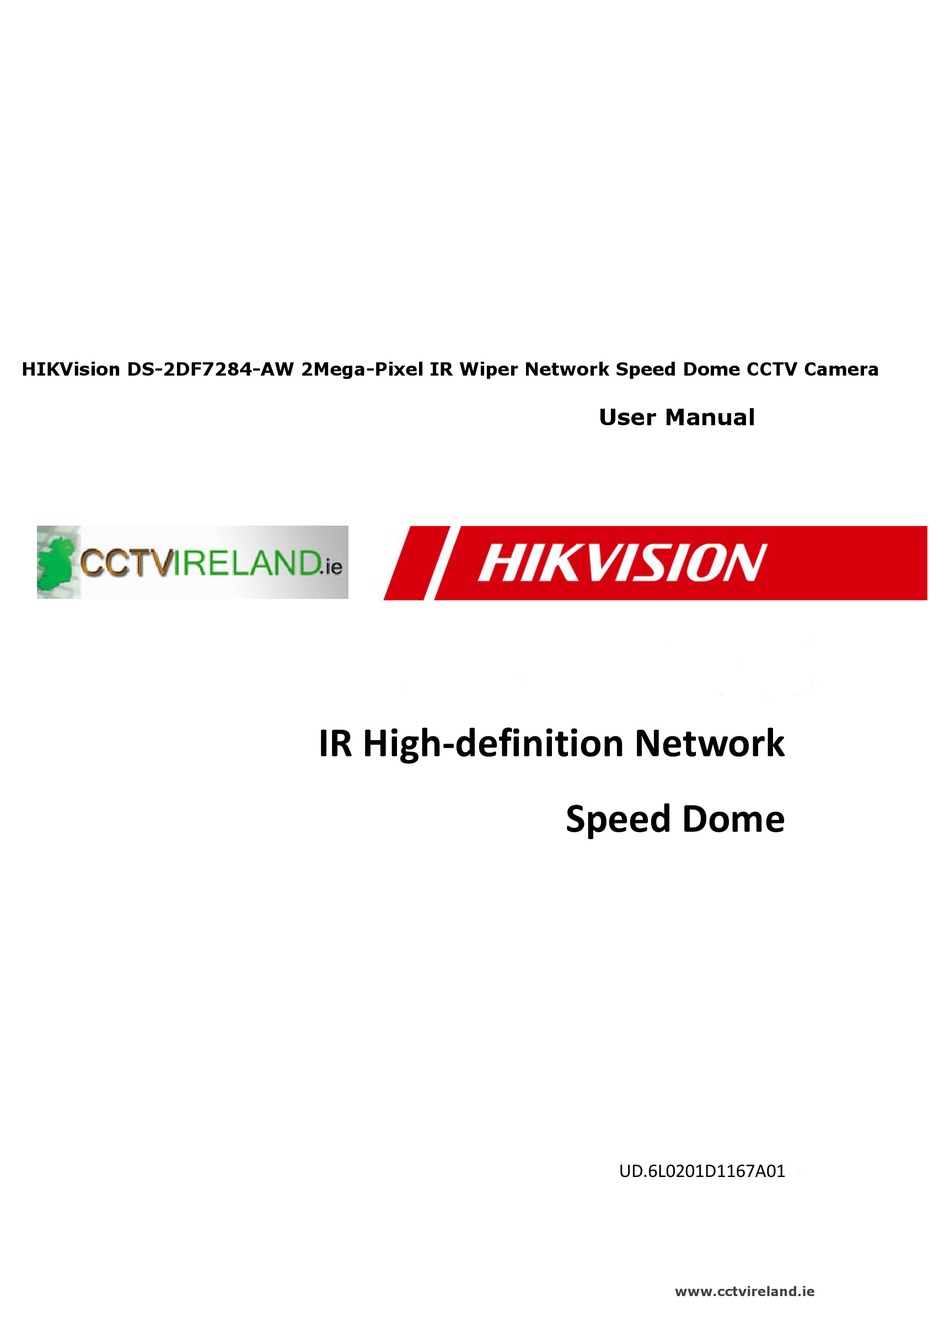 HIKVISION DS-2DF7284-AW USER MANUAL Pdf Download | ManualsLib